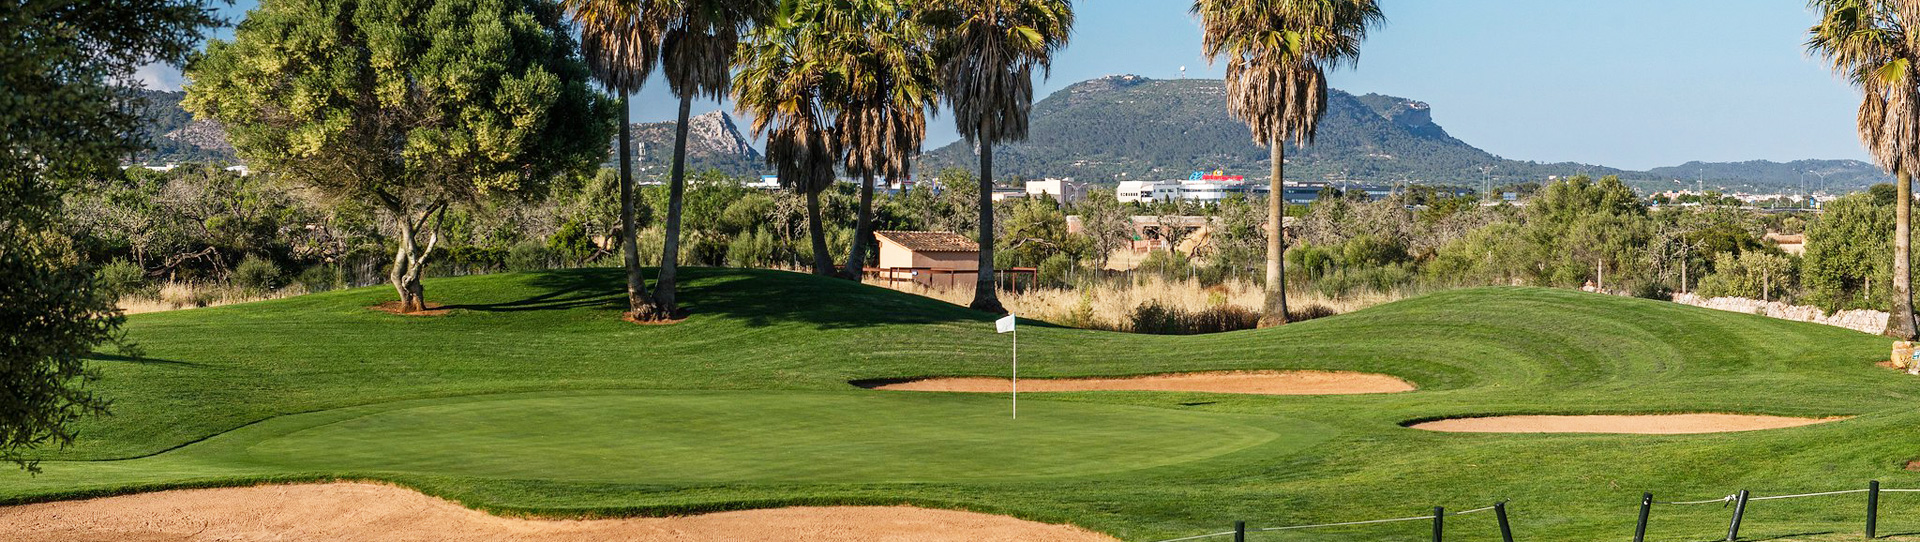 Spain golf courses - Son Antem Golf Course East - Photo 2